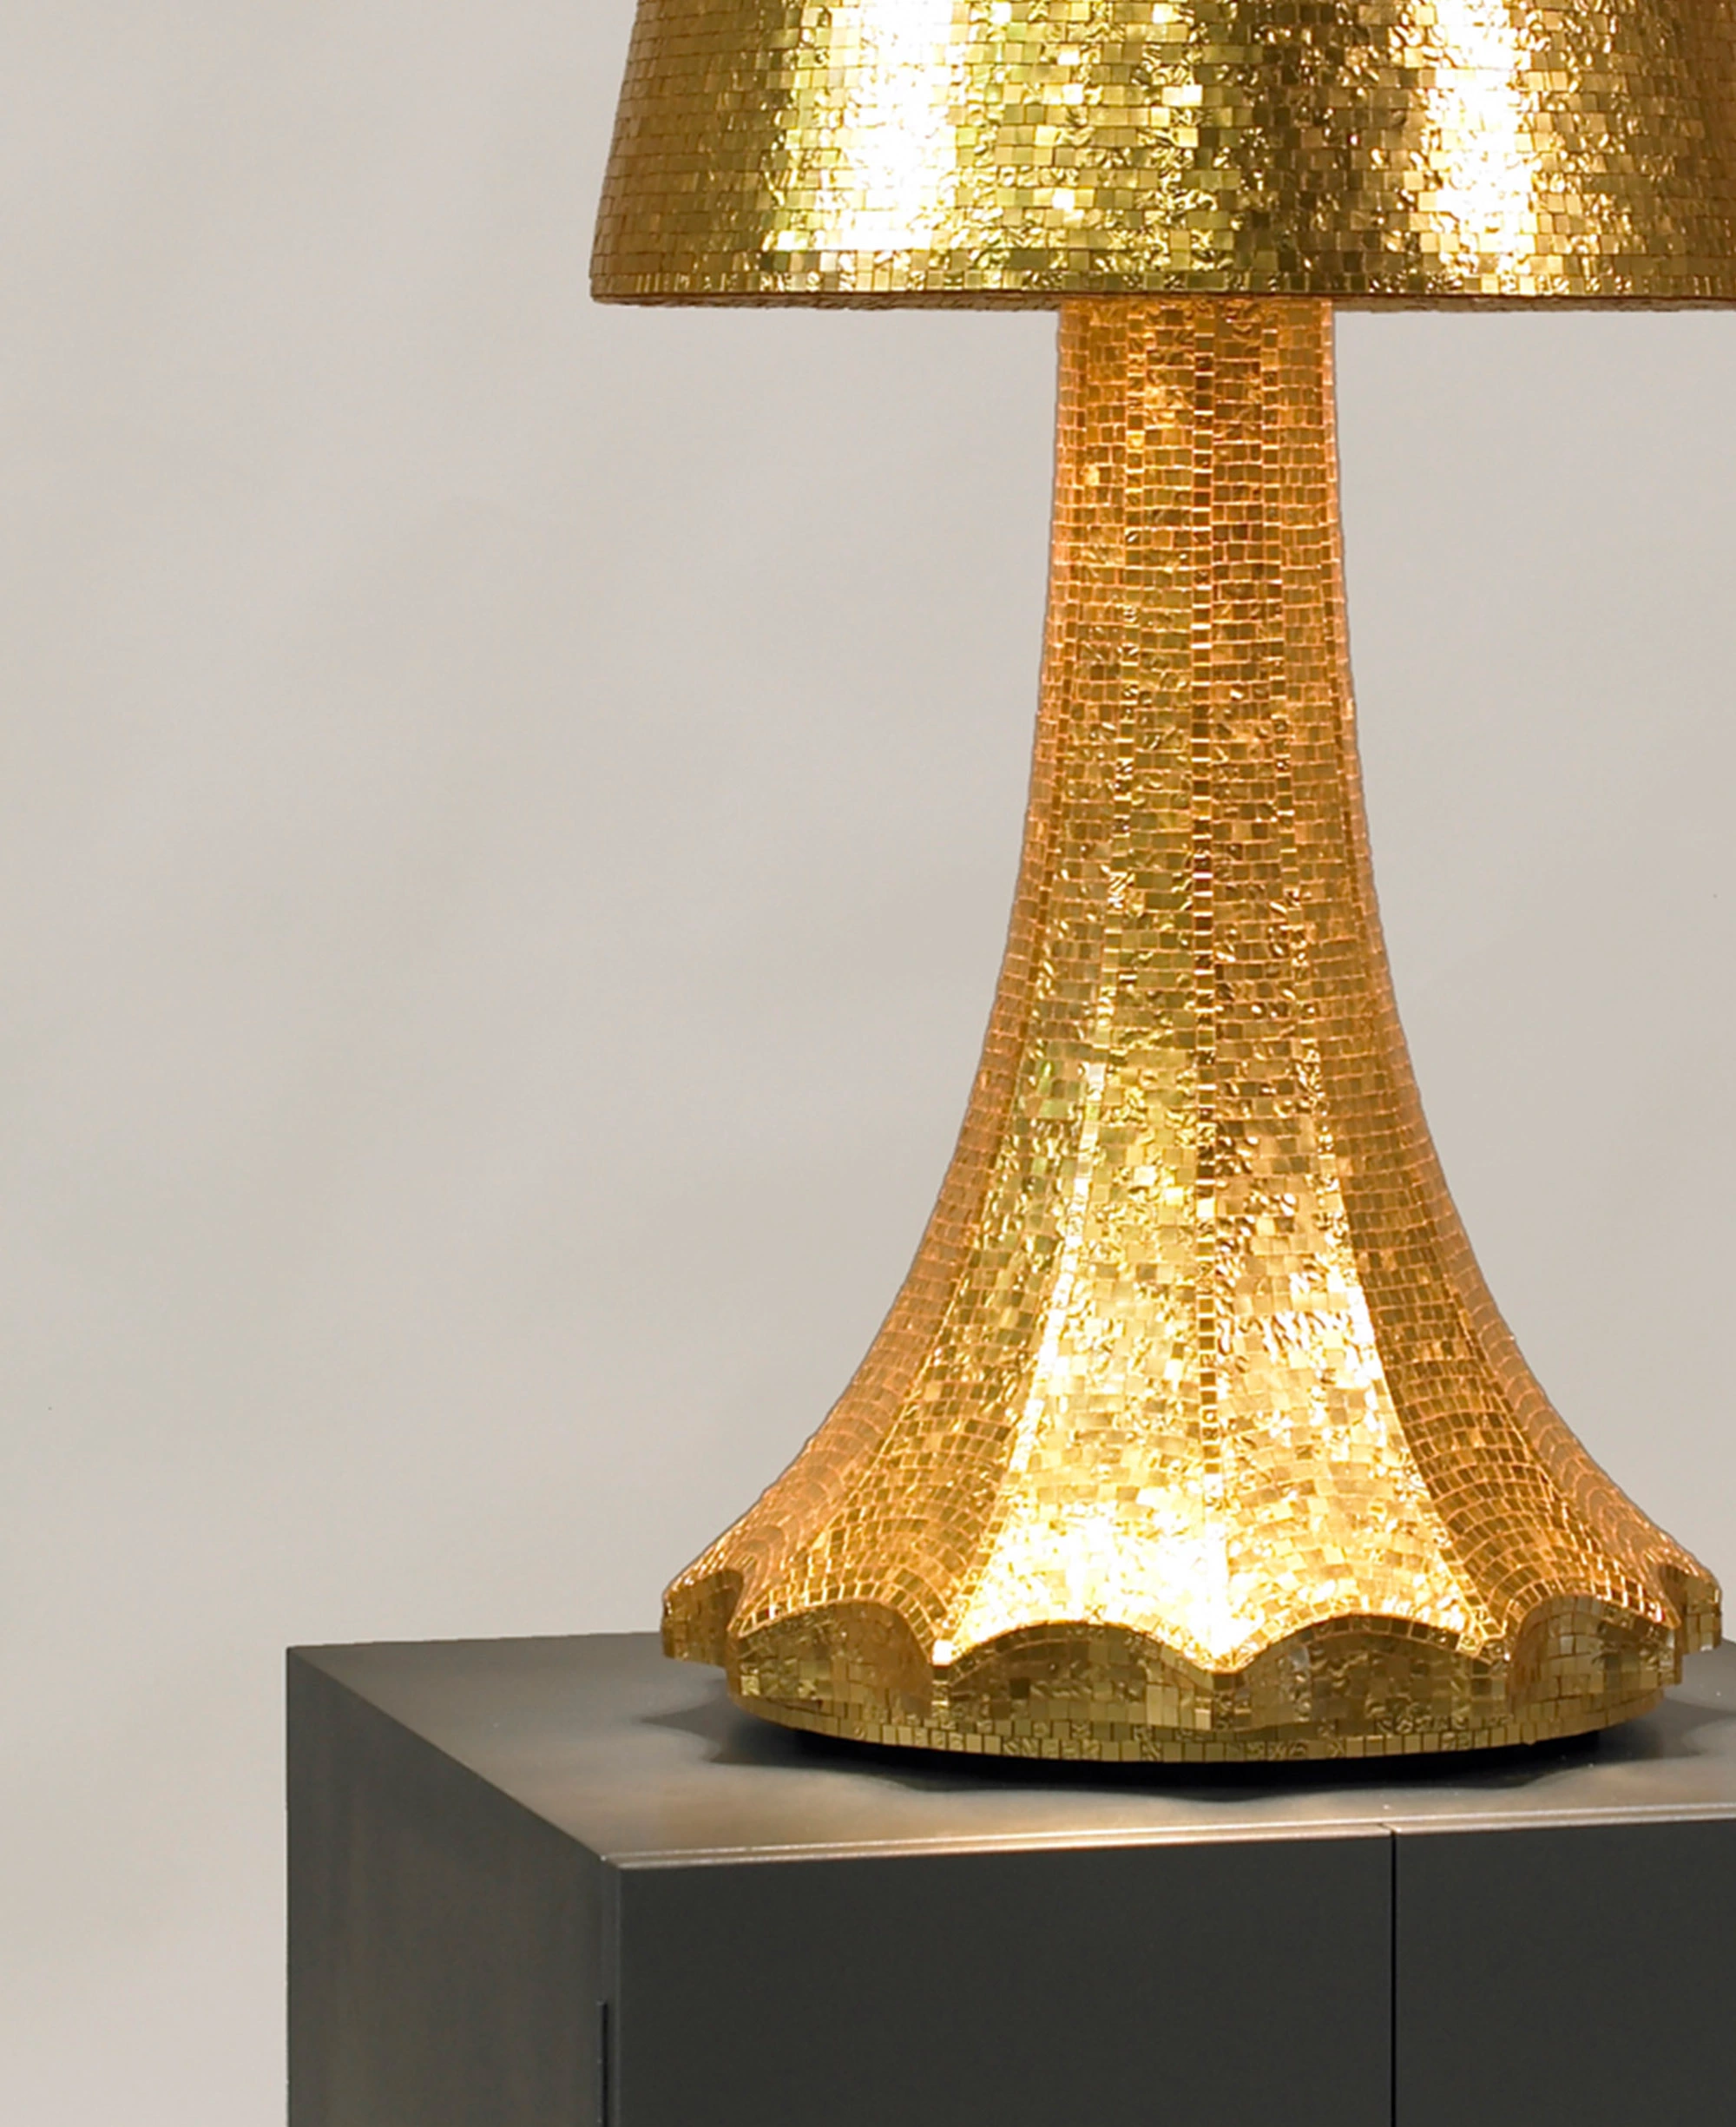 Lampada yellow gold - Alessandro Mendini - Floor light - Galerie kreo